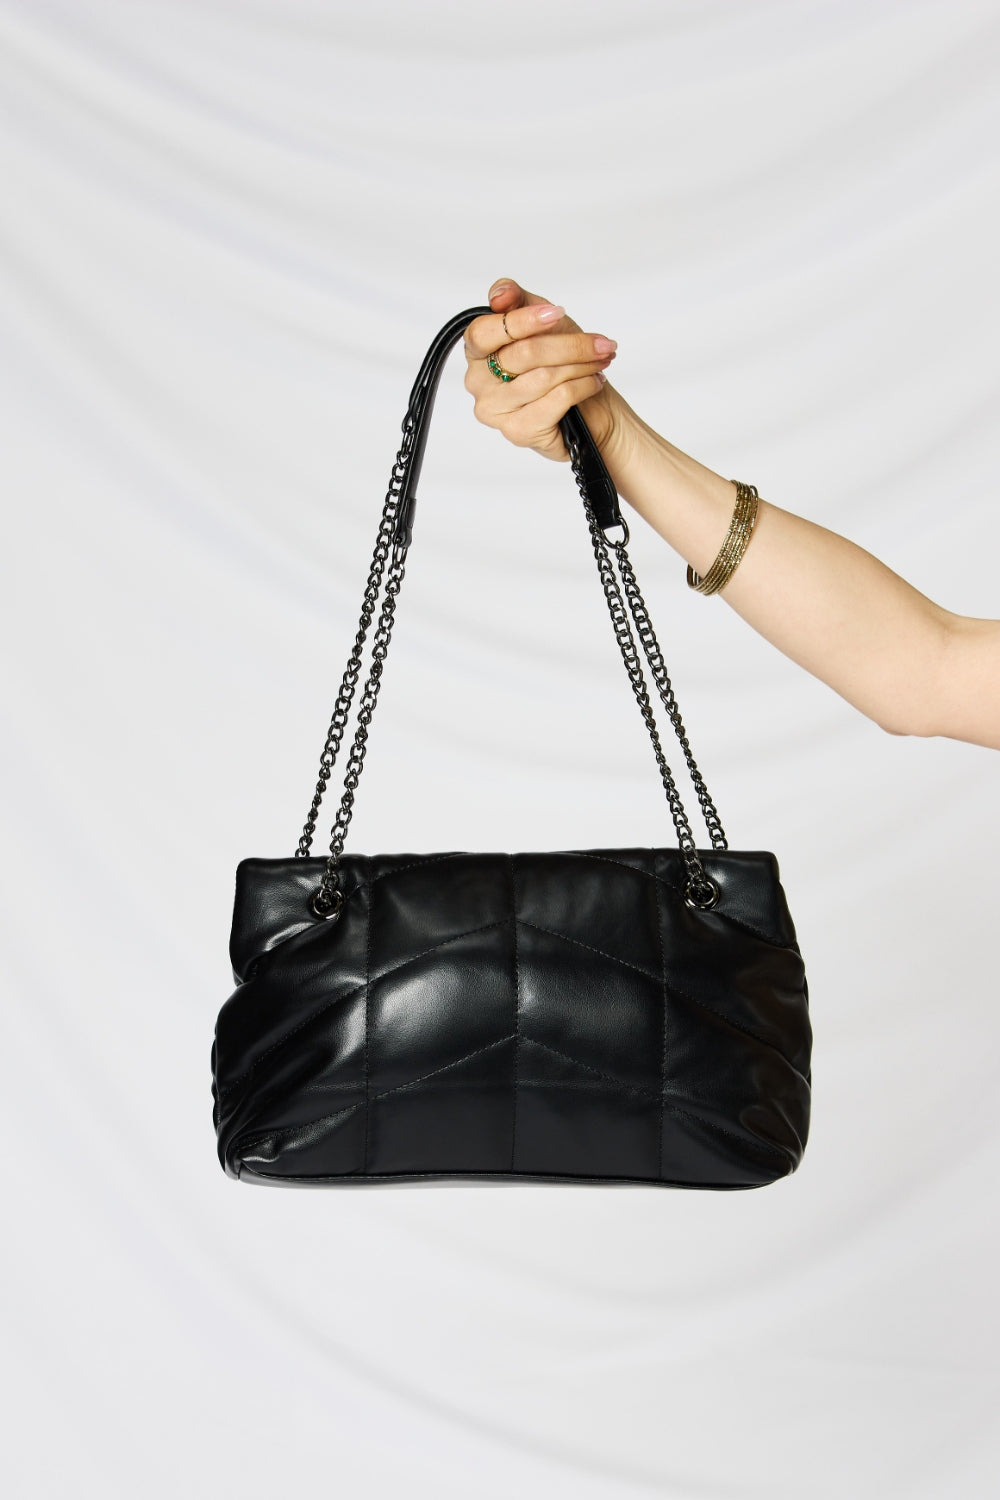 SHOMICO PU Leather Chain Handbag - House of Binx 